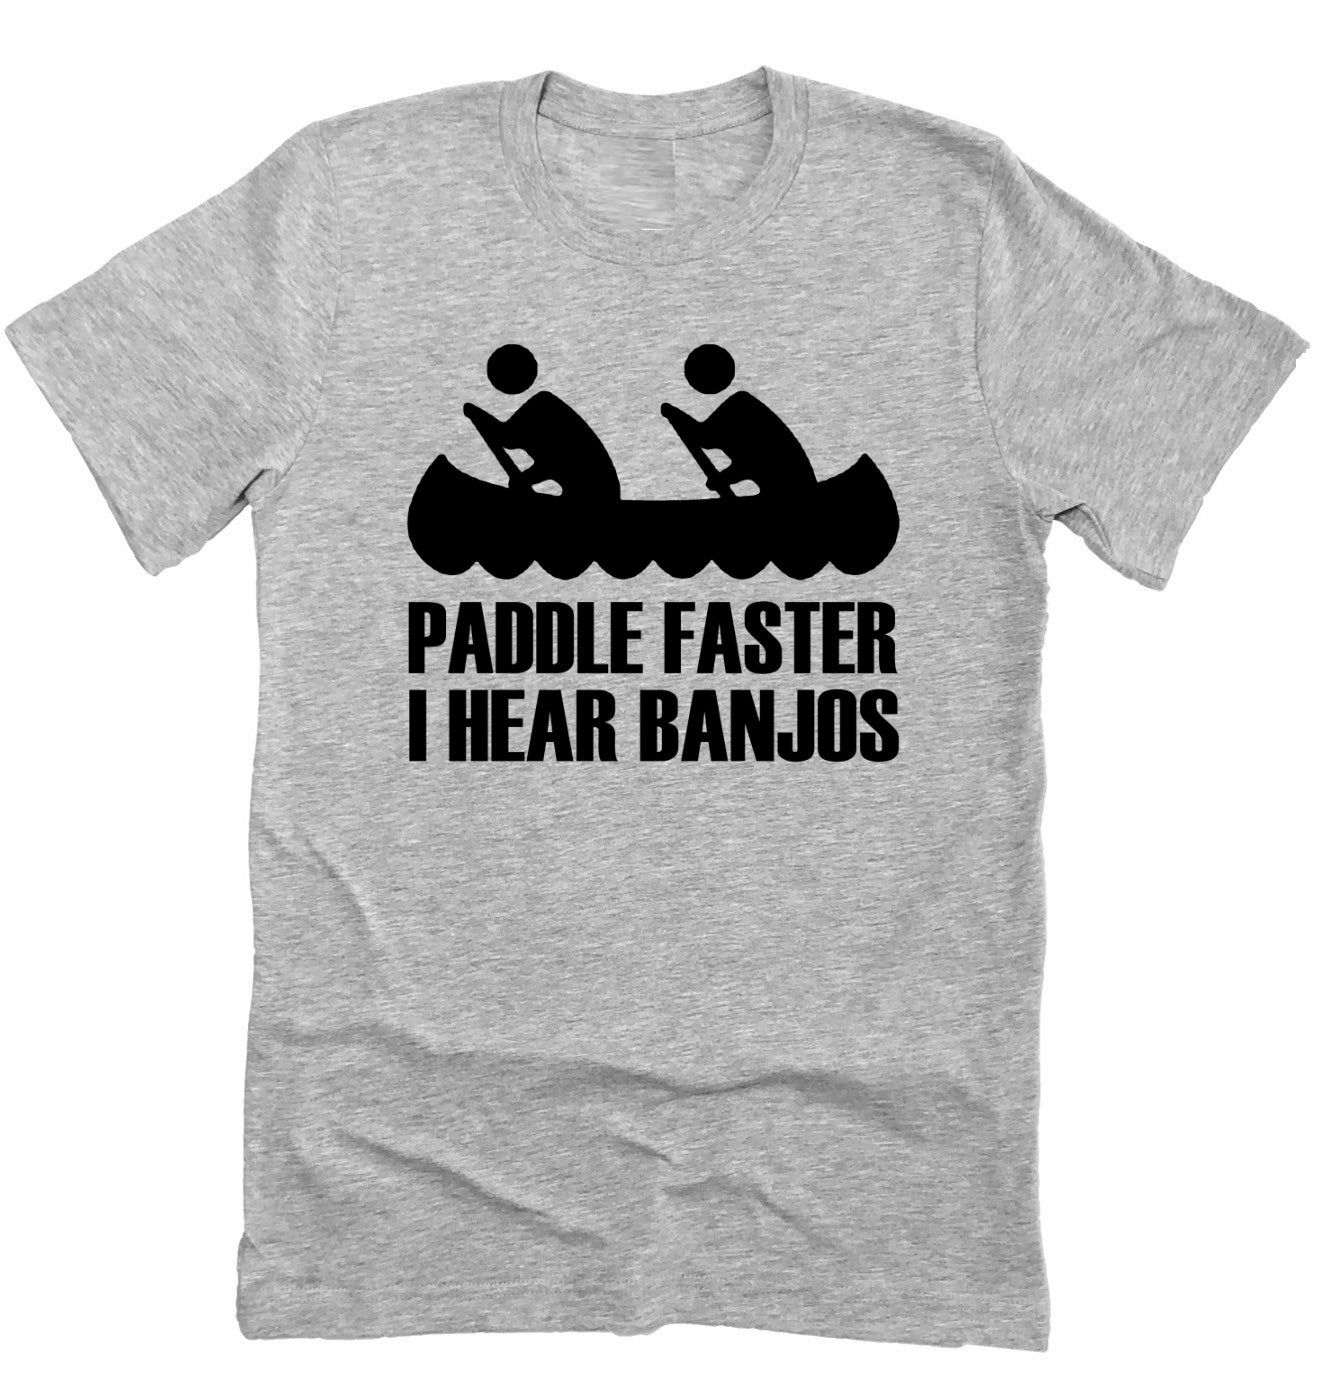 Paddle Faster I Hear Banjos, Canoeing Shirt, Funny Shirt Novelty T-shirt Tee